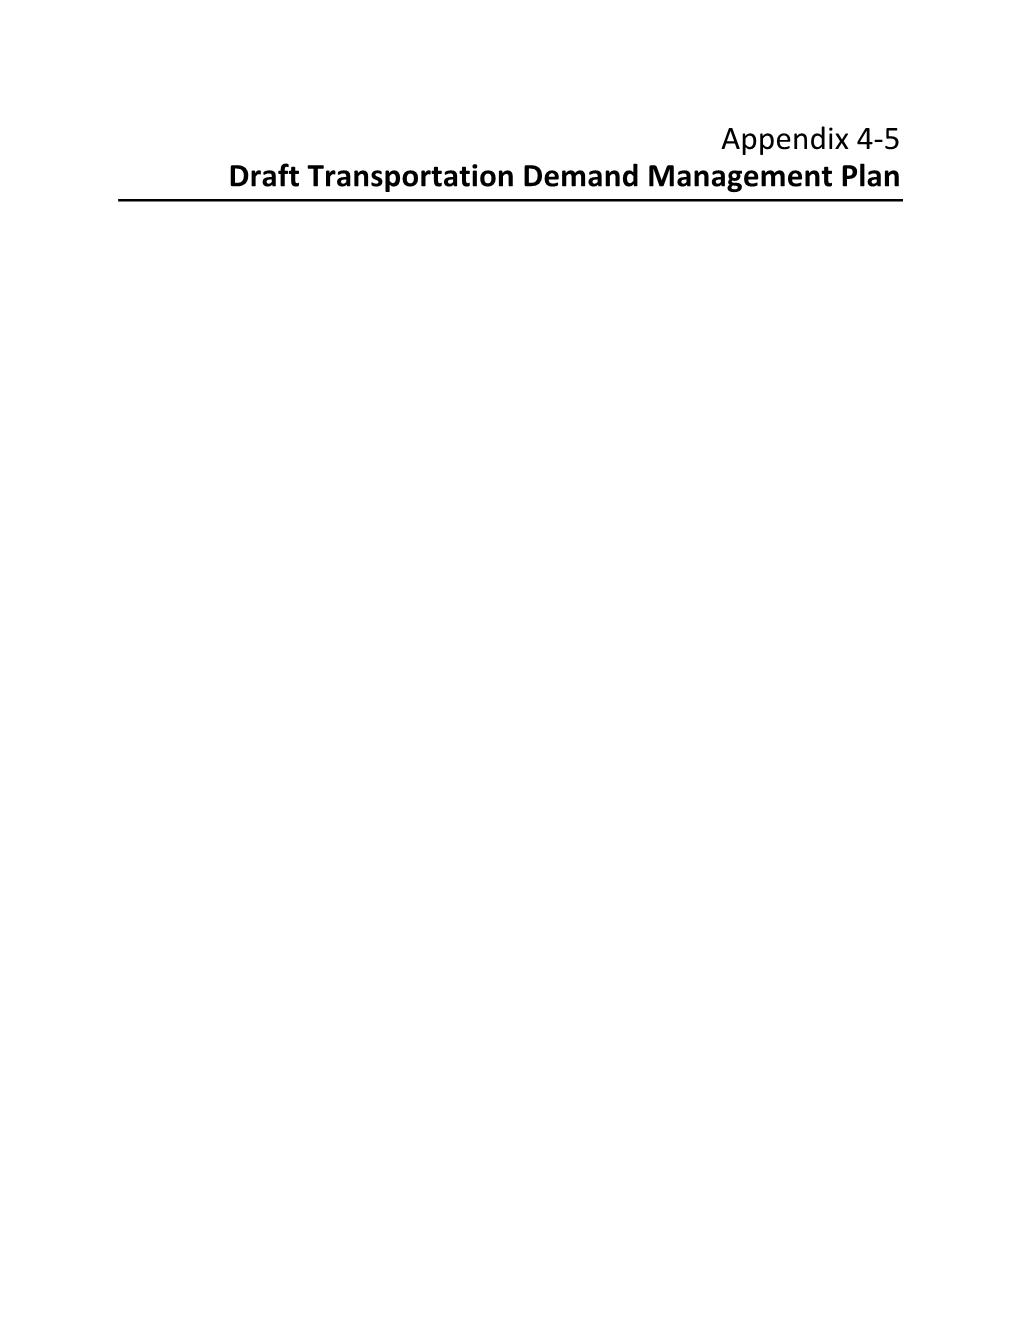 Why Transportation Demand Management